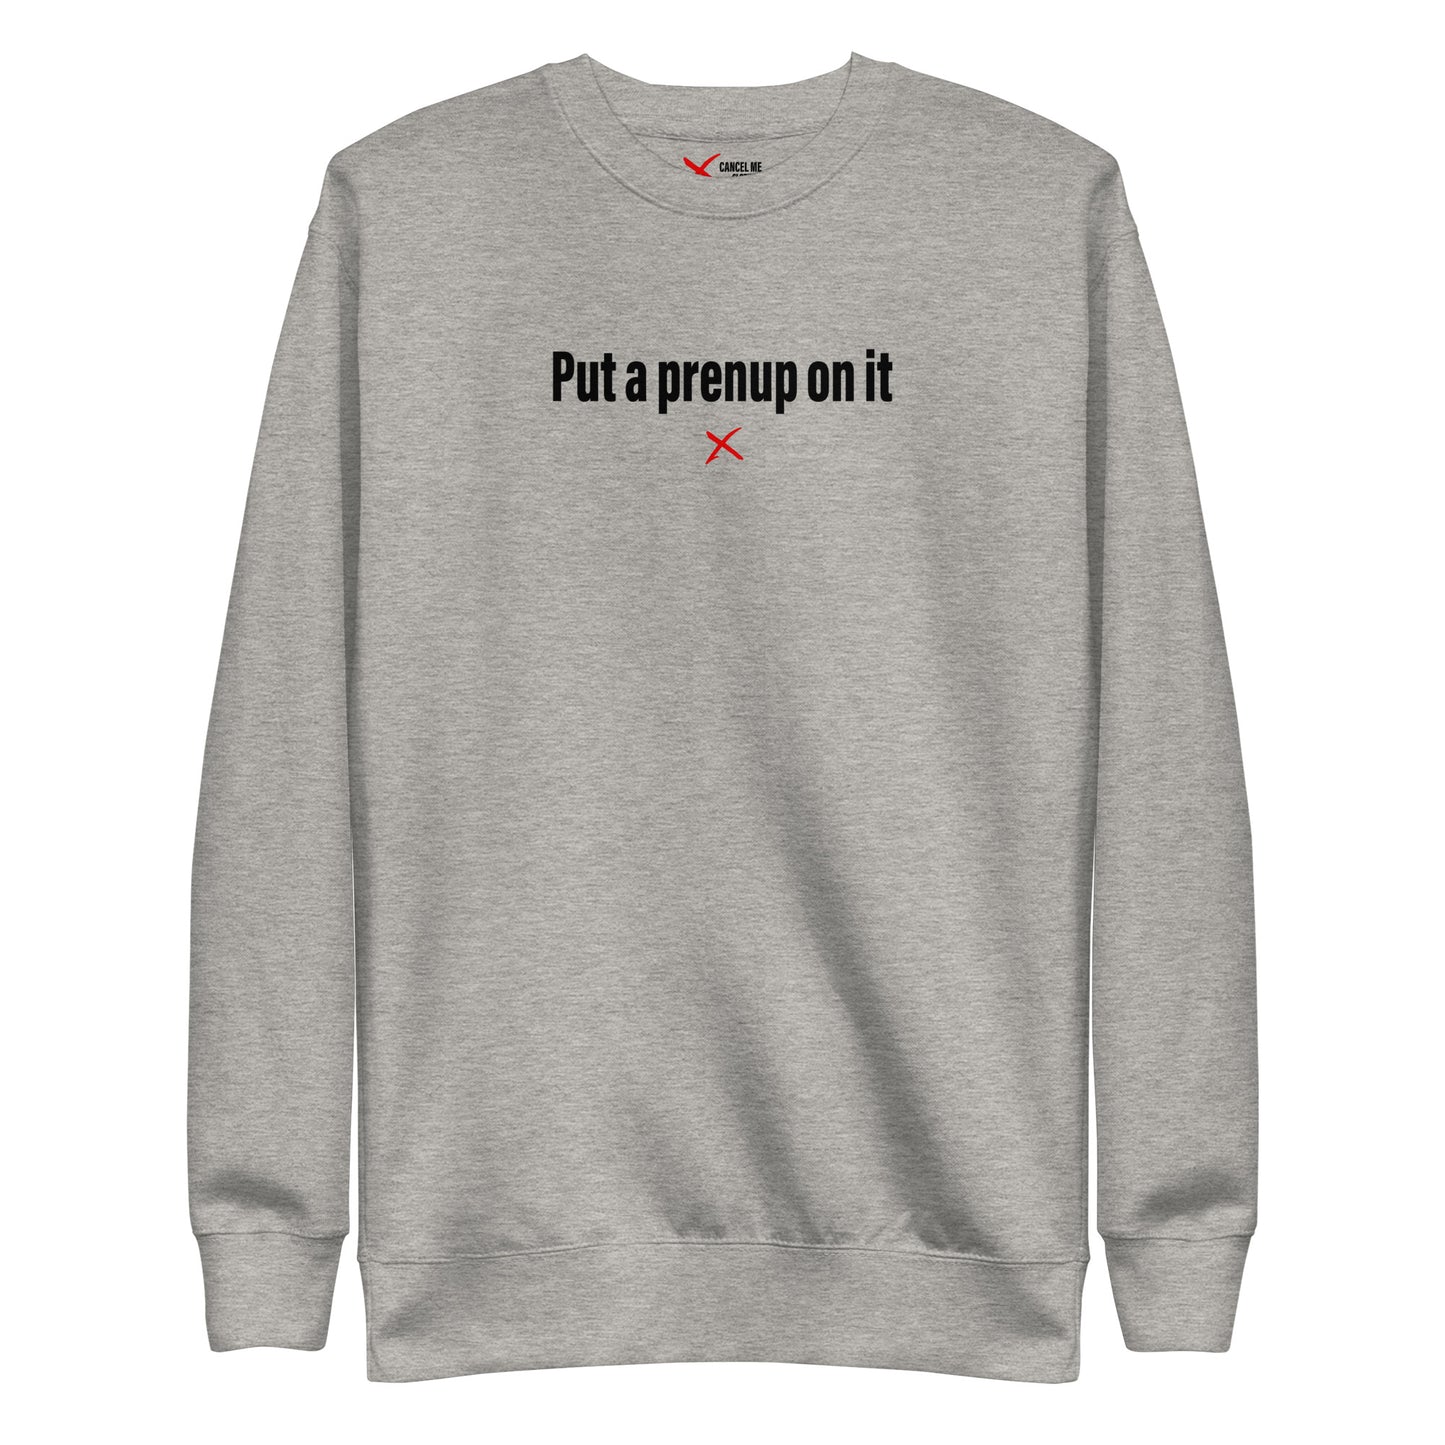 Put a prenup on it - Sweatshirt